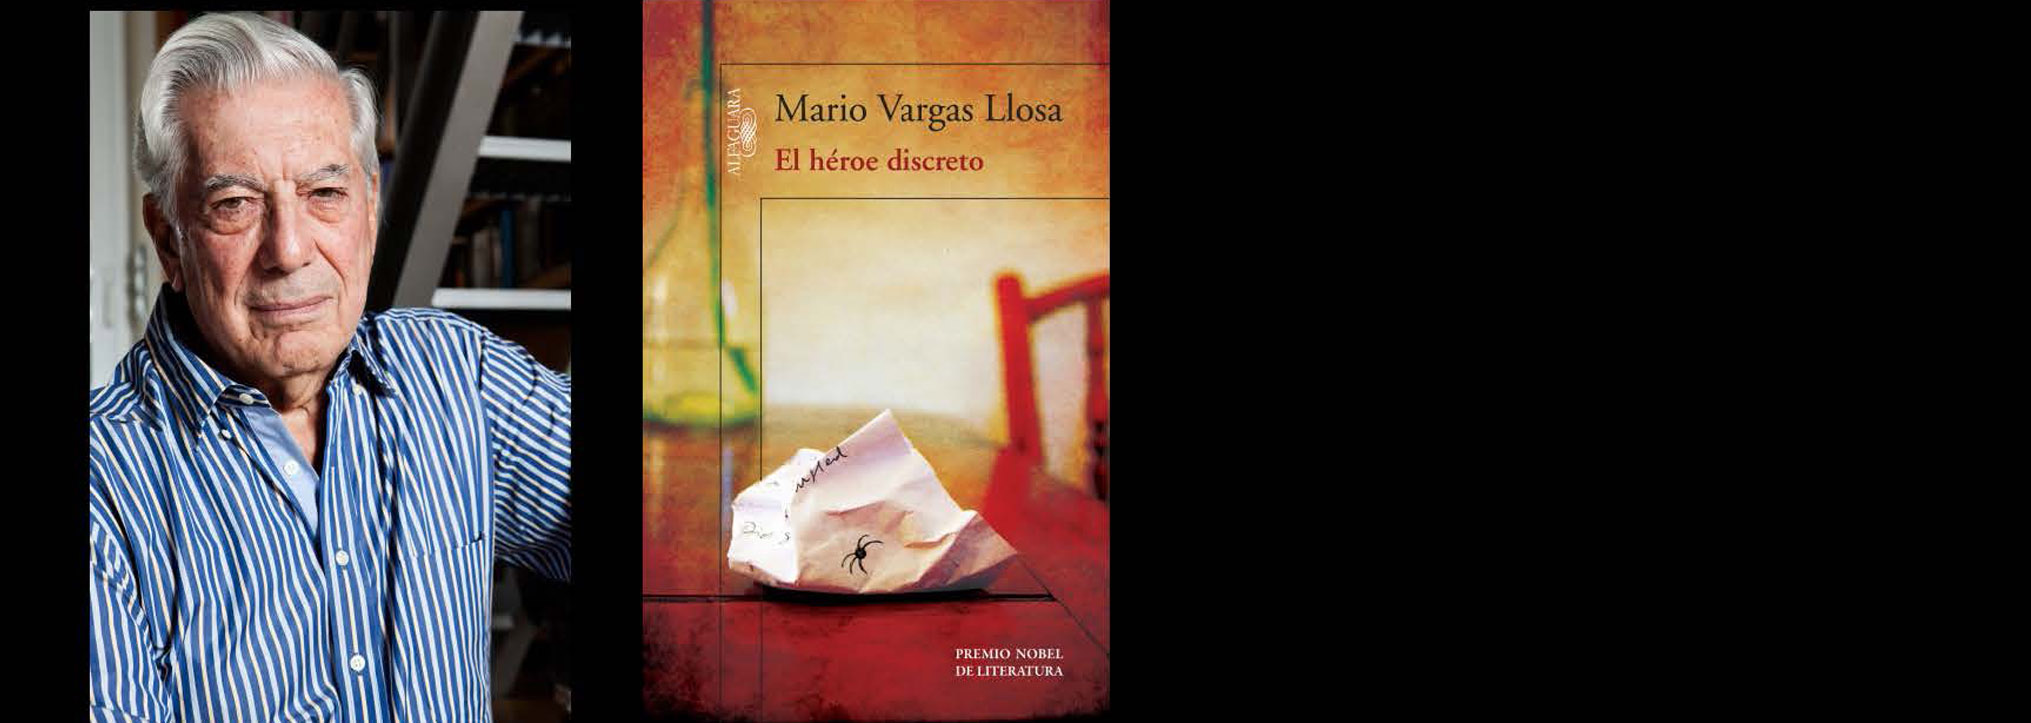 El héroe discreto de Vargas Llosa